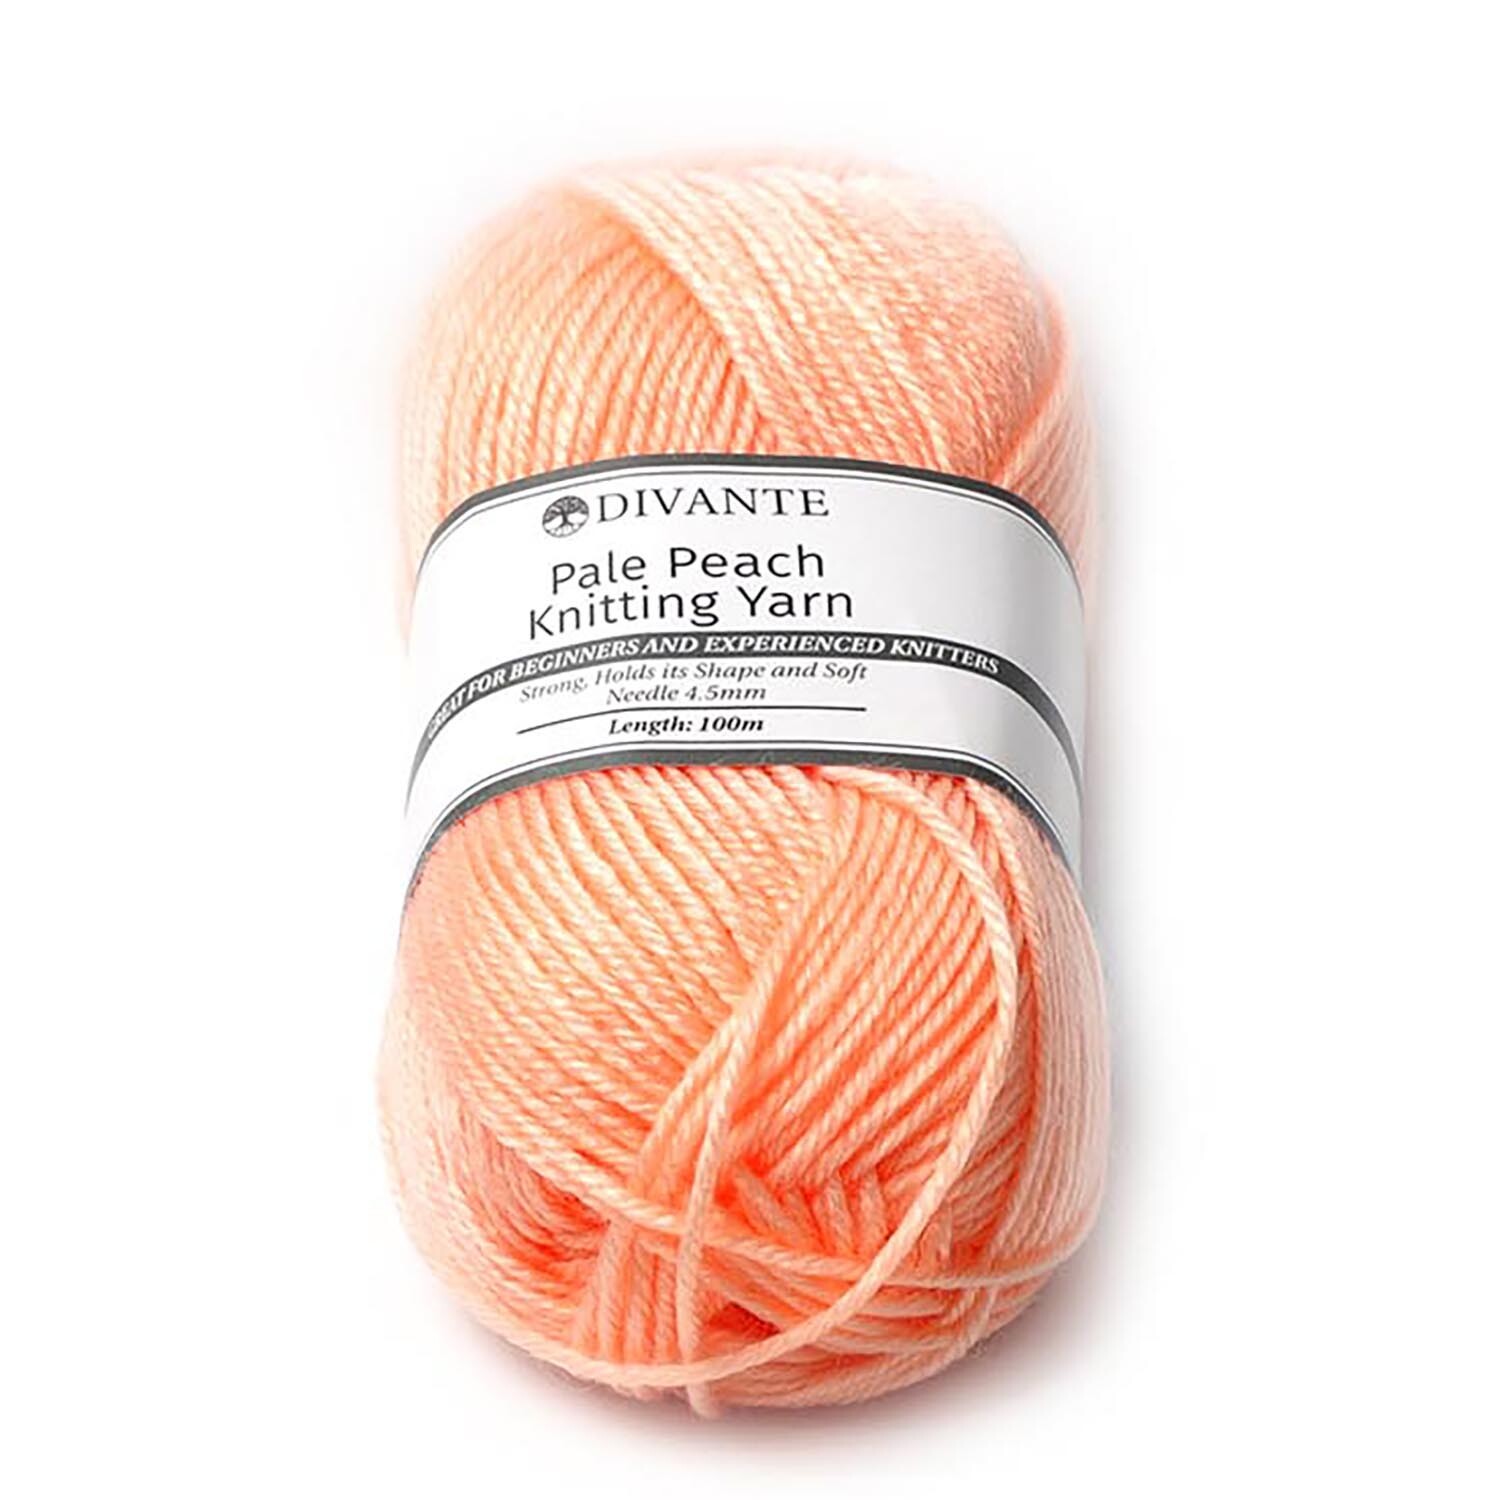 Divante Value Knitting Yarn - Pale Peach Image